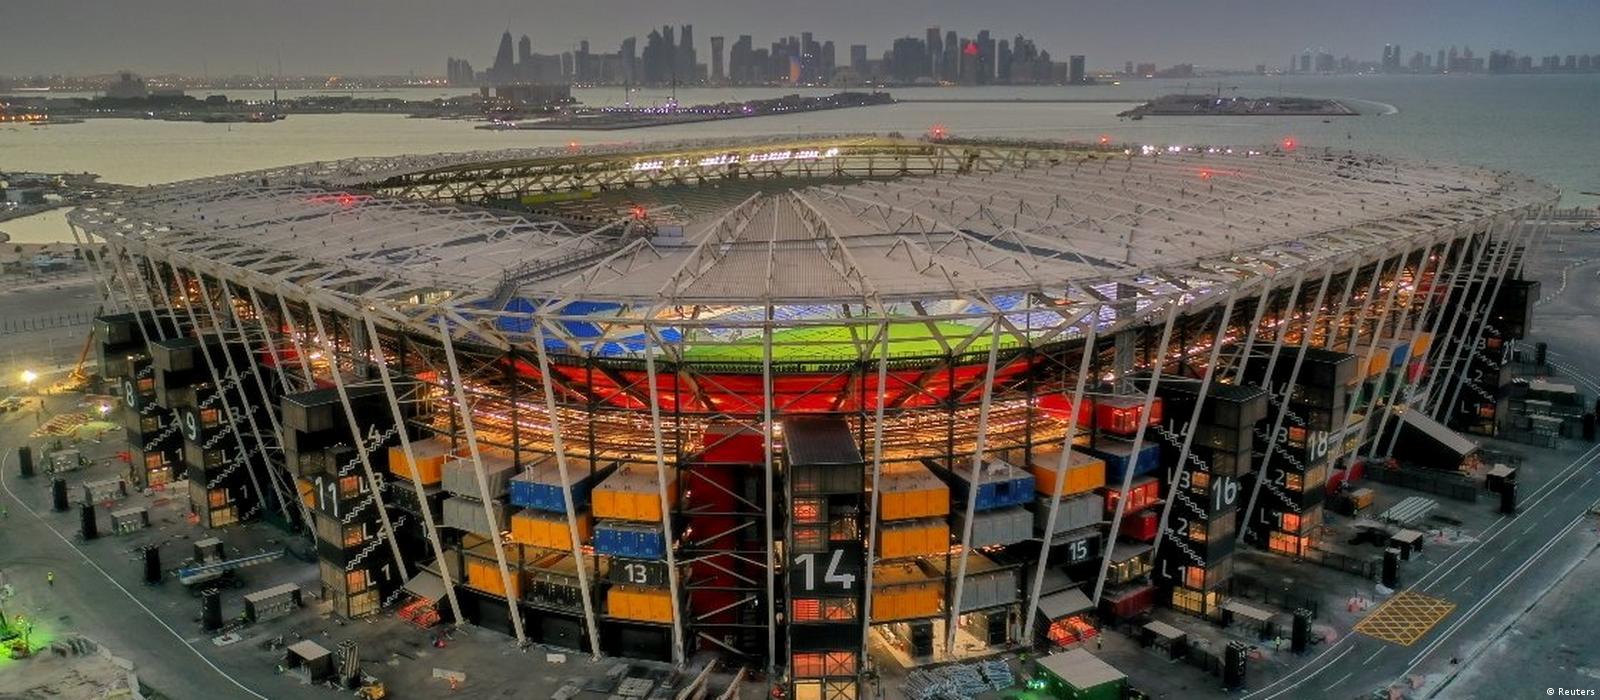 Qatar touts dismountable stadium for World Cup â€“ DW â€“ 11/25/2021